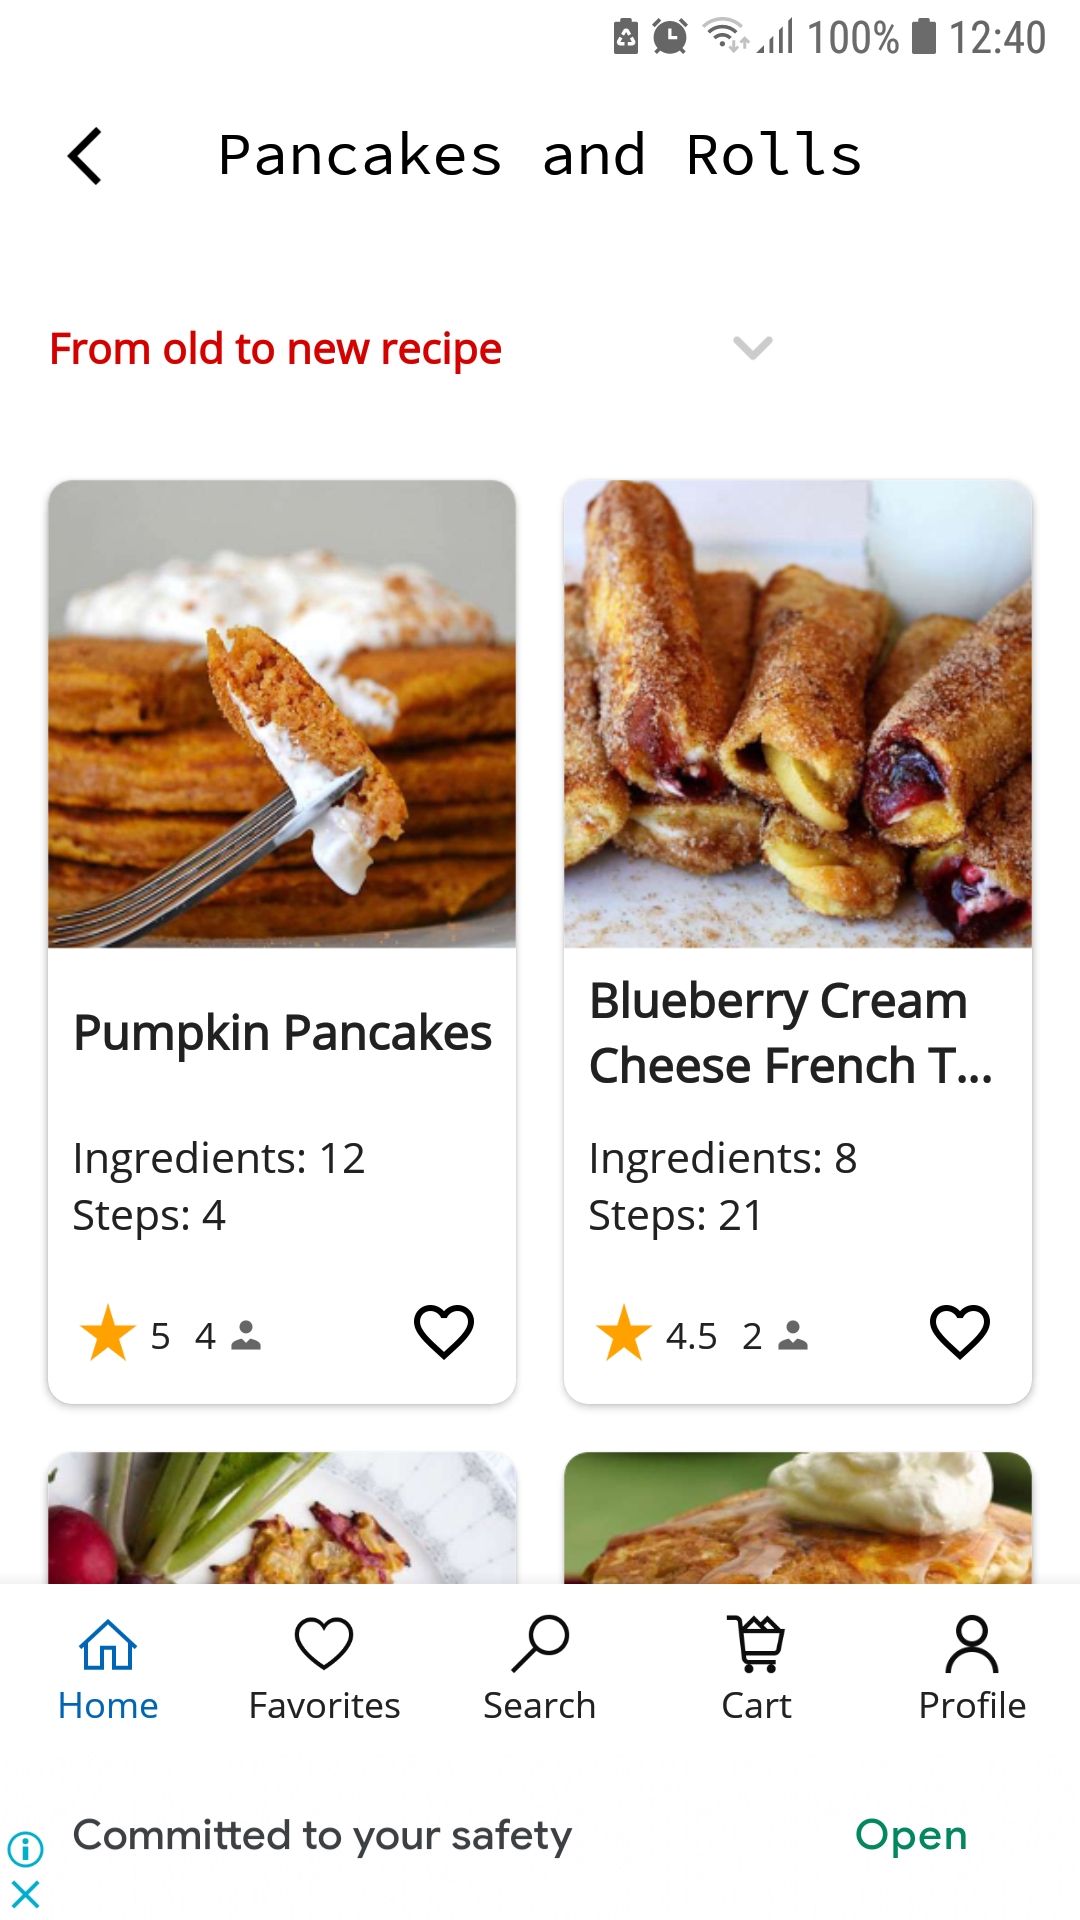 DIL Breakfast Recipes mobile breakfast recipe app home